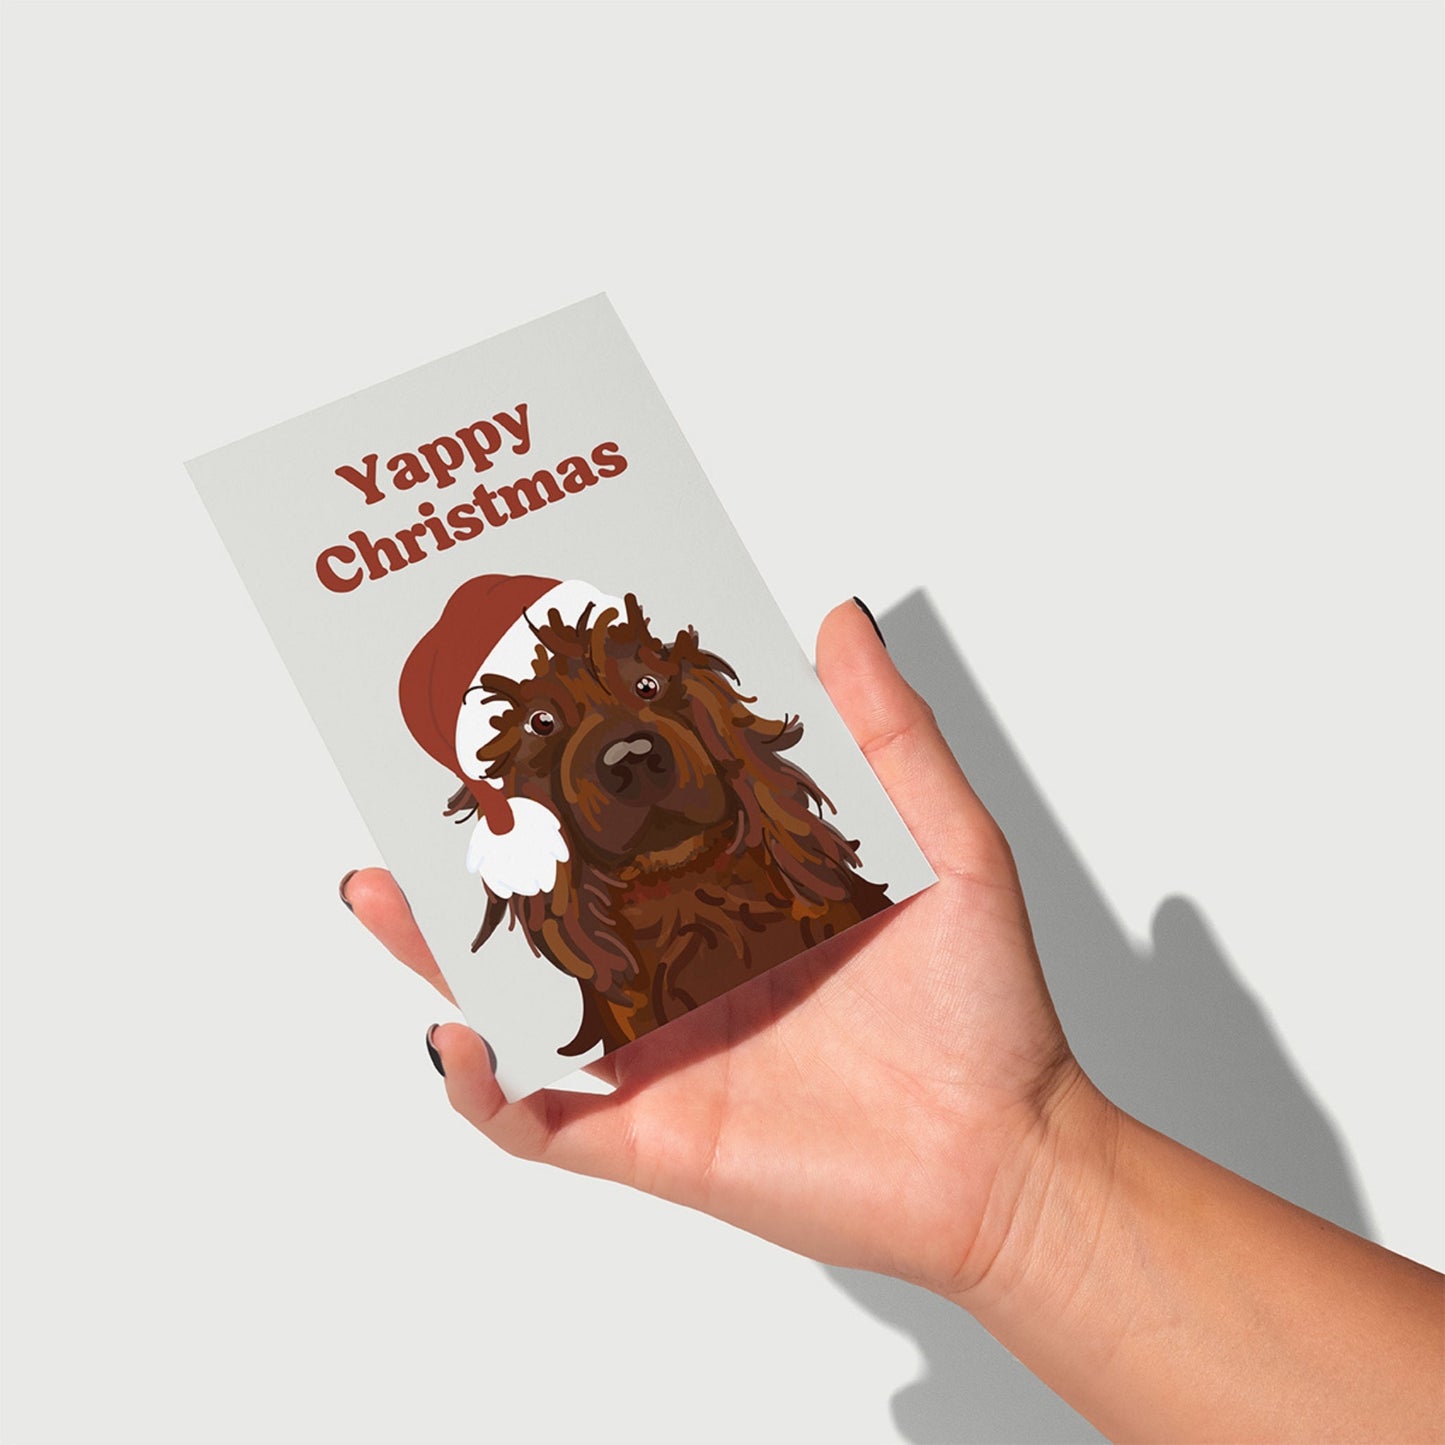 Wren & Rye Dog Christmas Card - Yappy Christmas (Santa Paws) Cream & Red